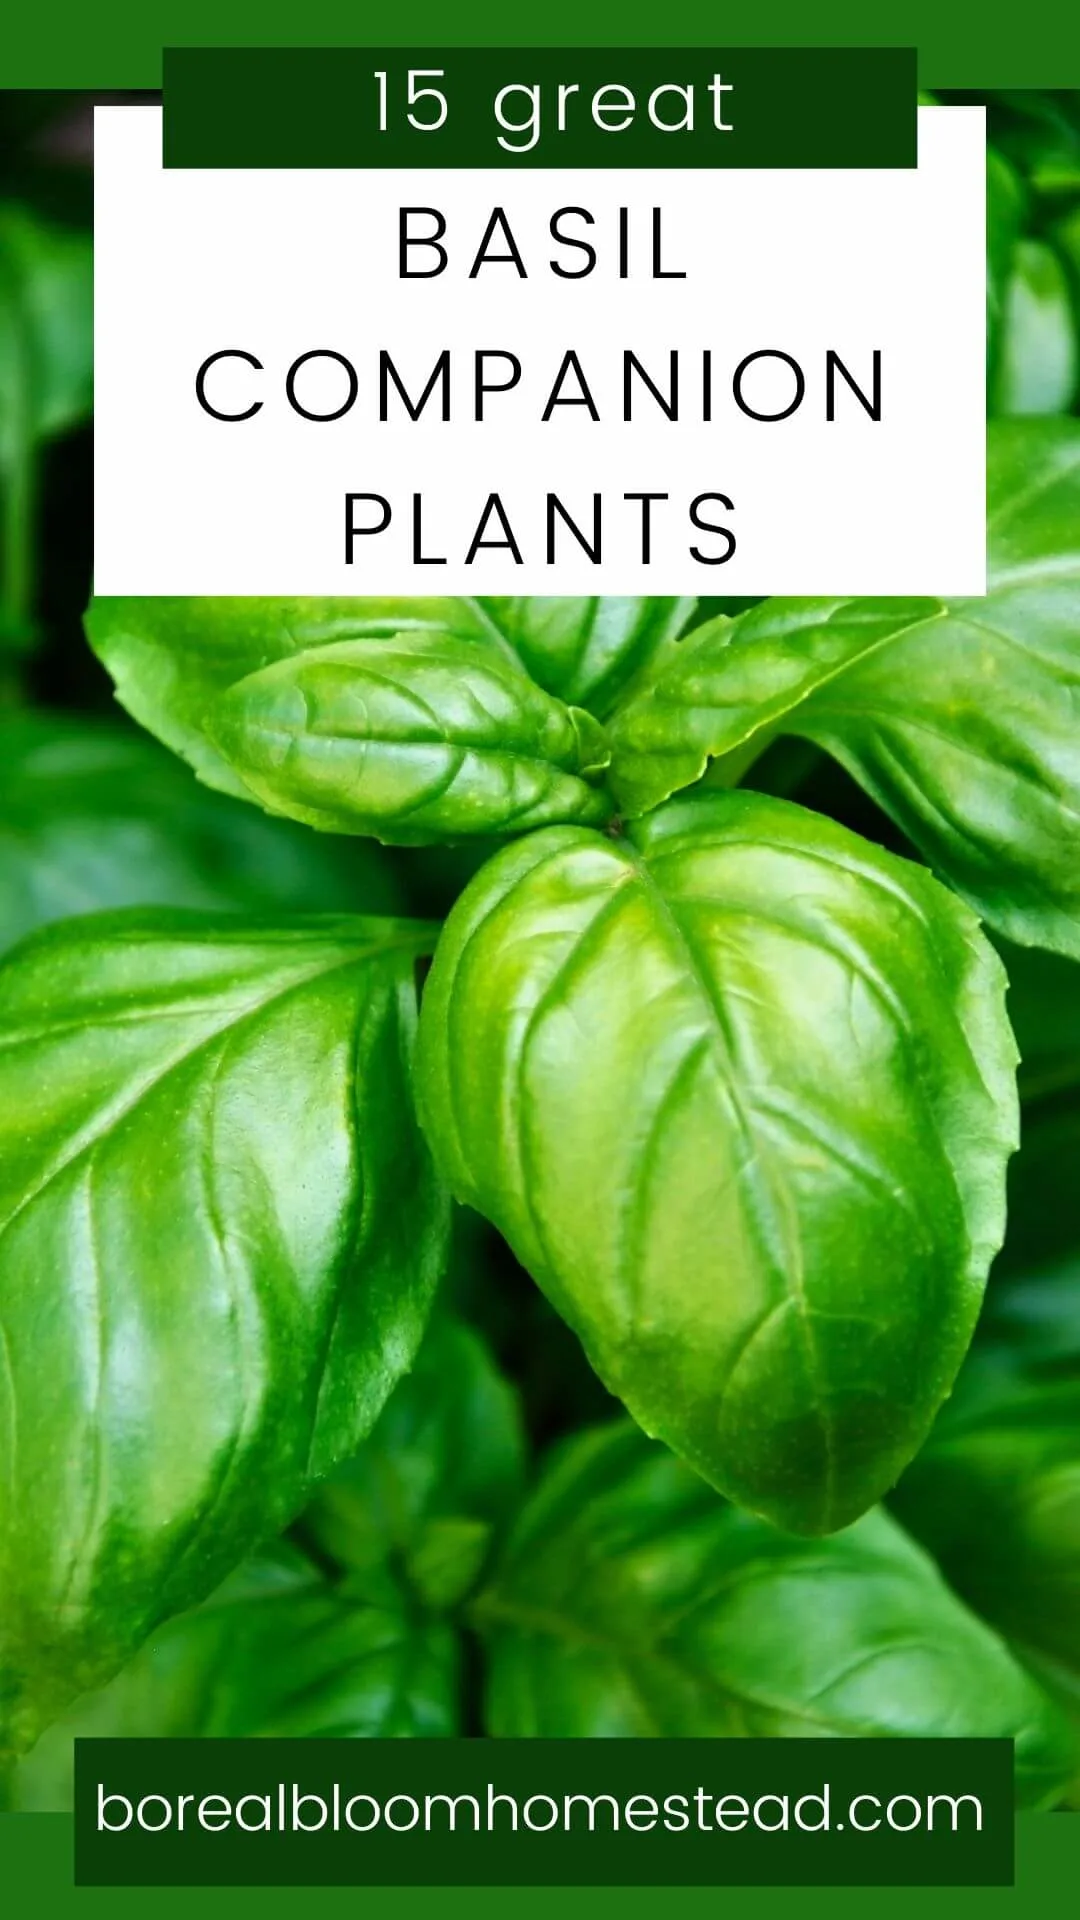 15 great basil companion plants pinterest graphic.